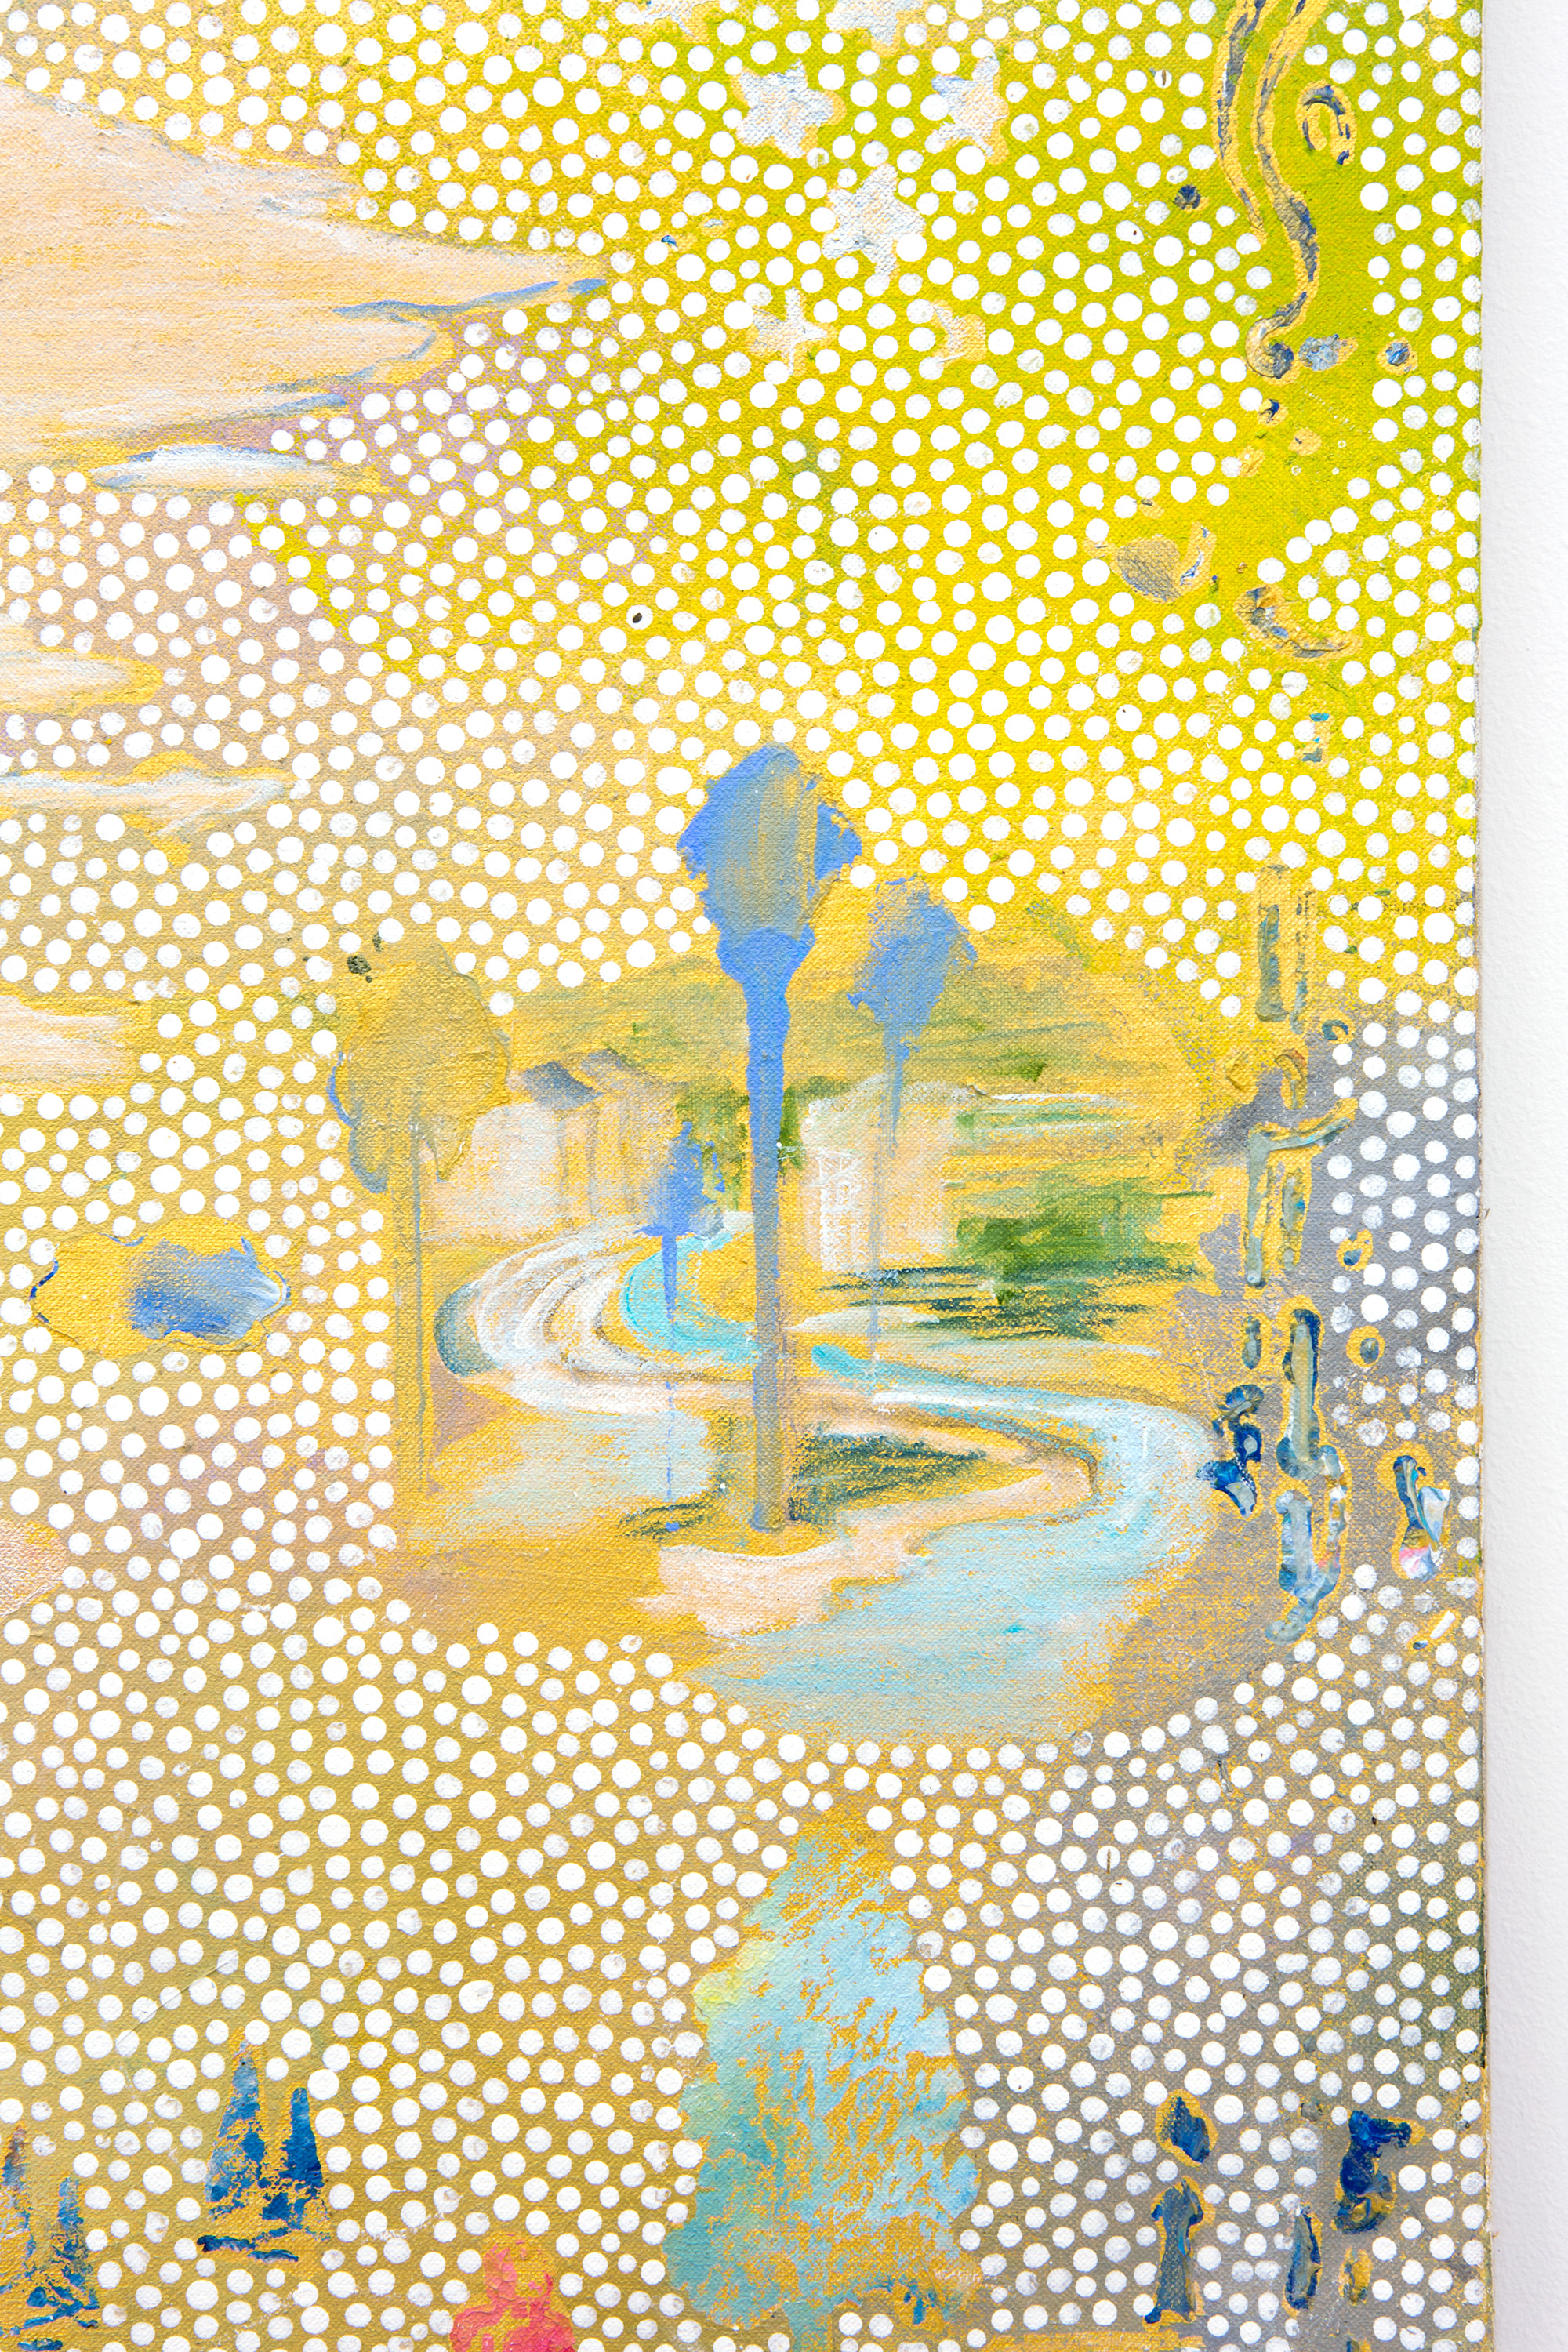 Tim Johnson (assisted by Yiwon Park), “Piero” (detail), 2014, acrylic on linen, 182 × 151 cm, Courtesy Dominik Mersch Gallery, Sydney